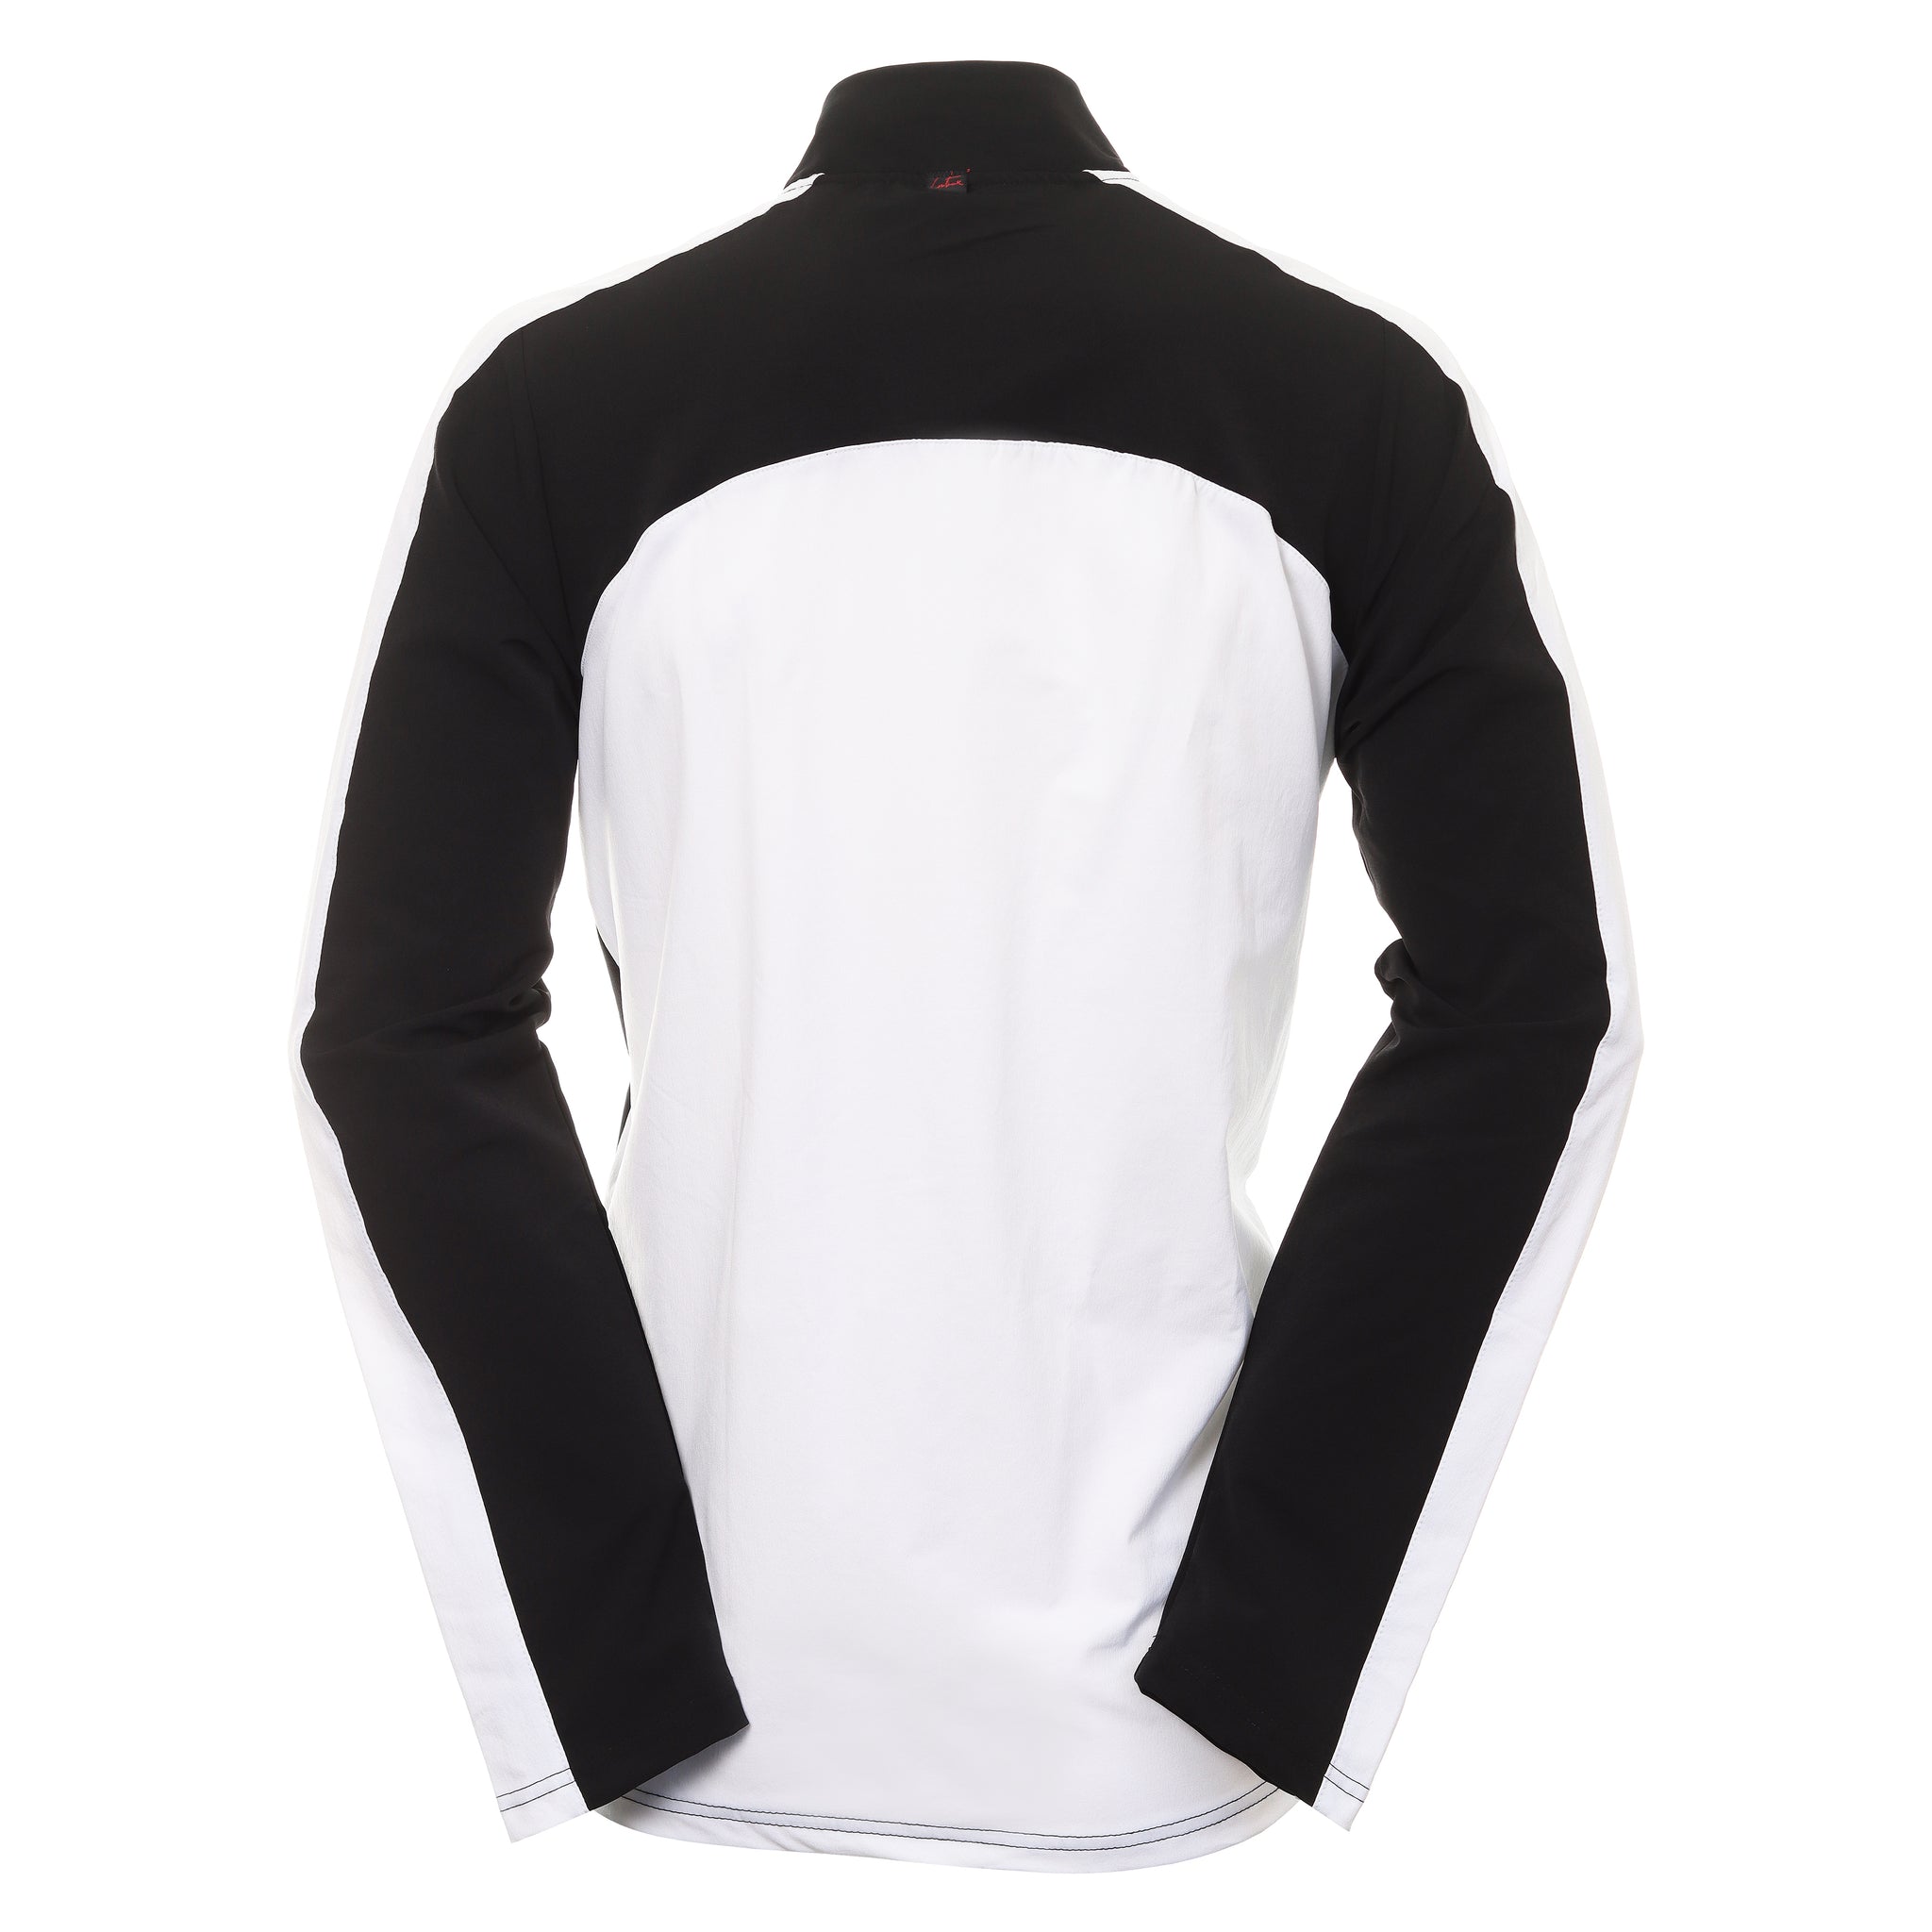 couture-club-golf-1-4-zip-shell-jacket-tccm1987-black-white